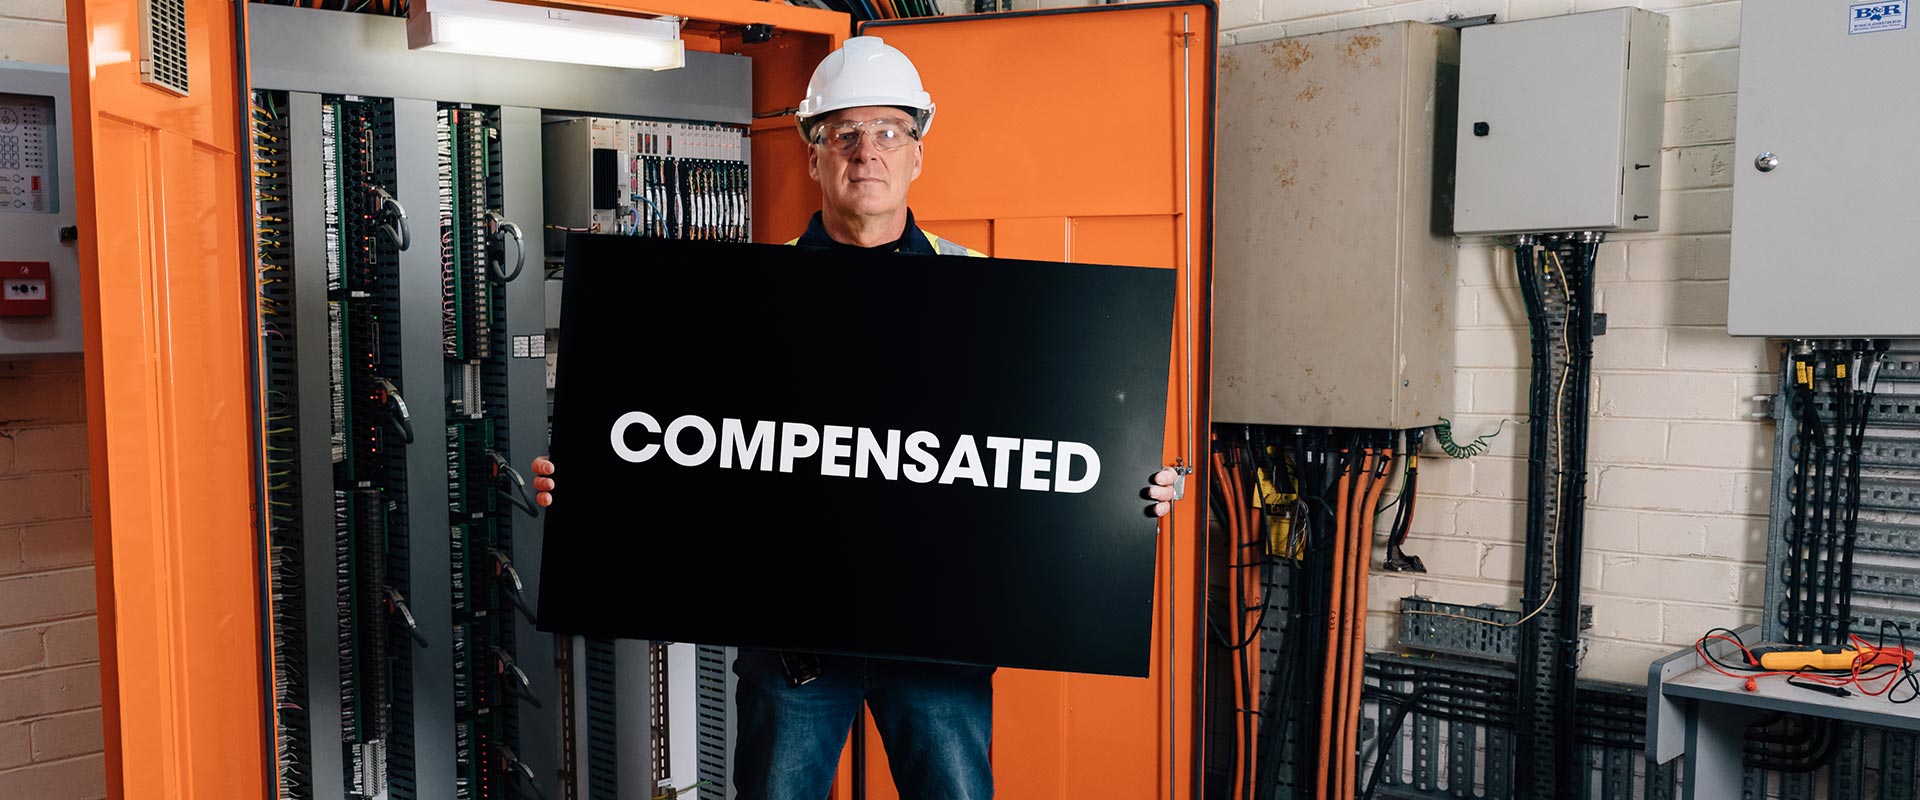 compensation/banner-comp-west-top.jpg